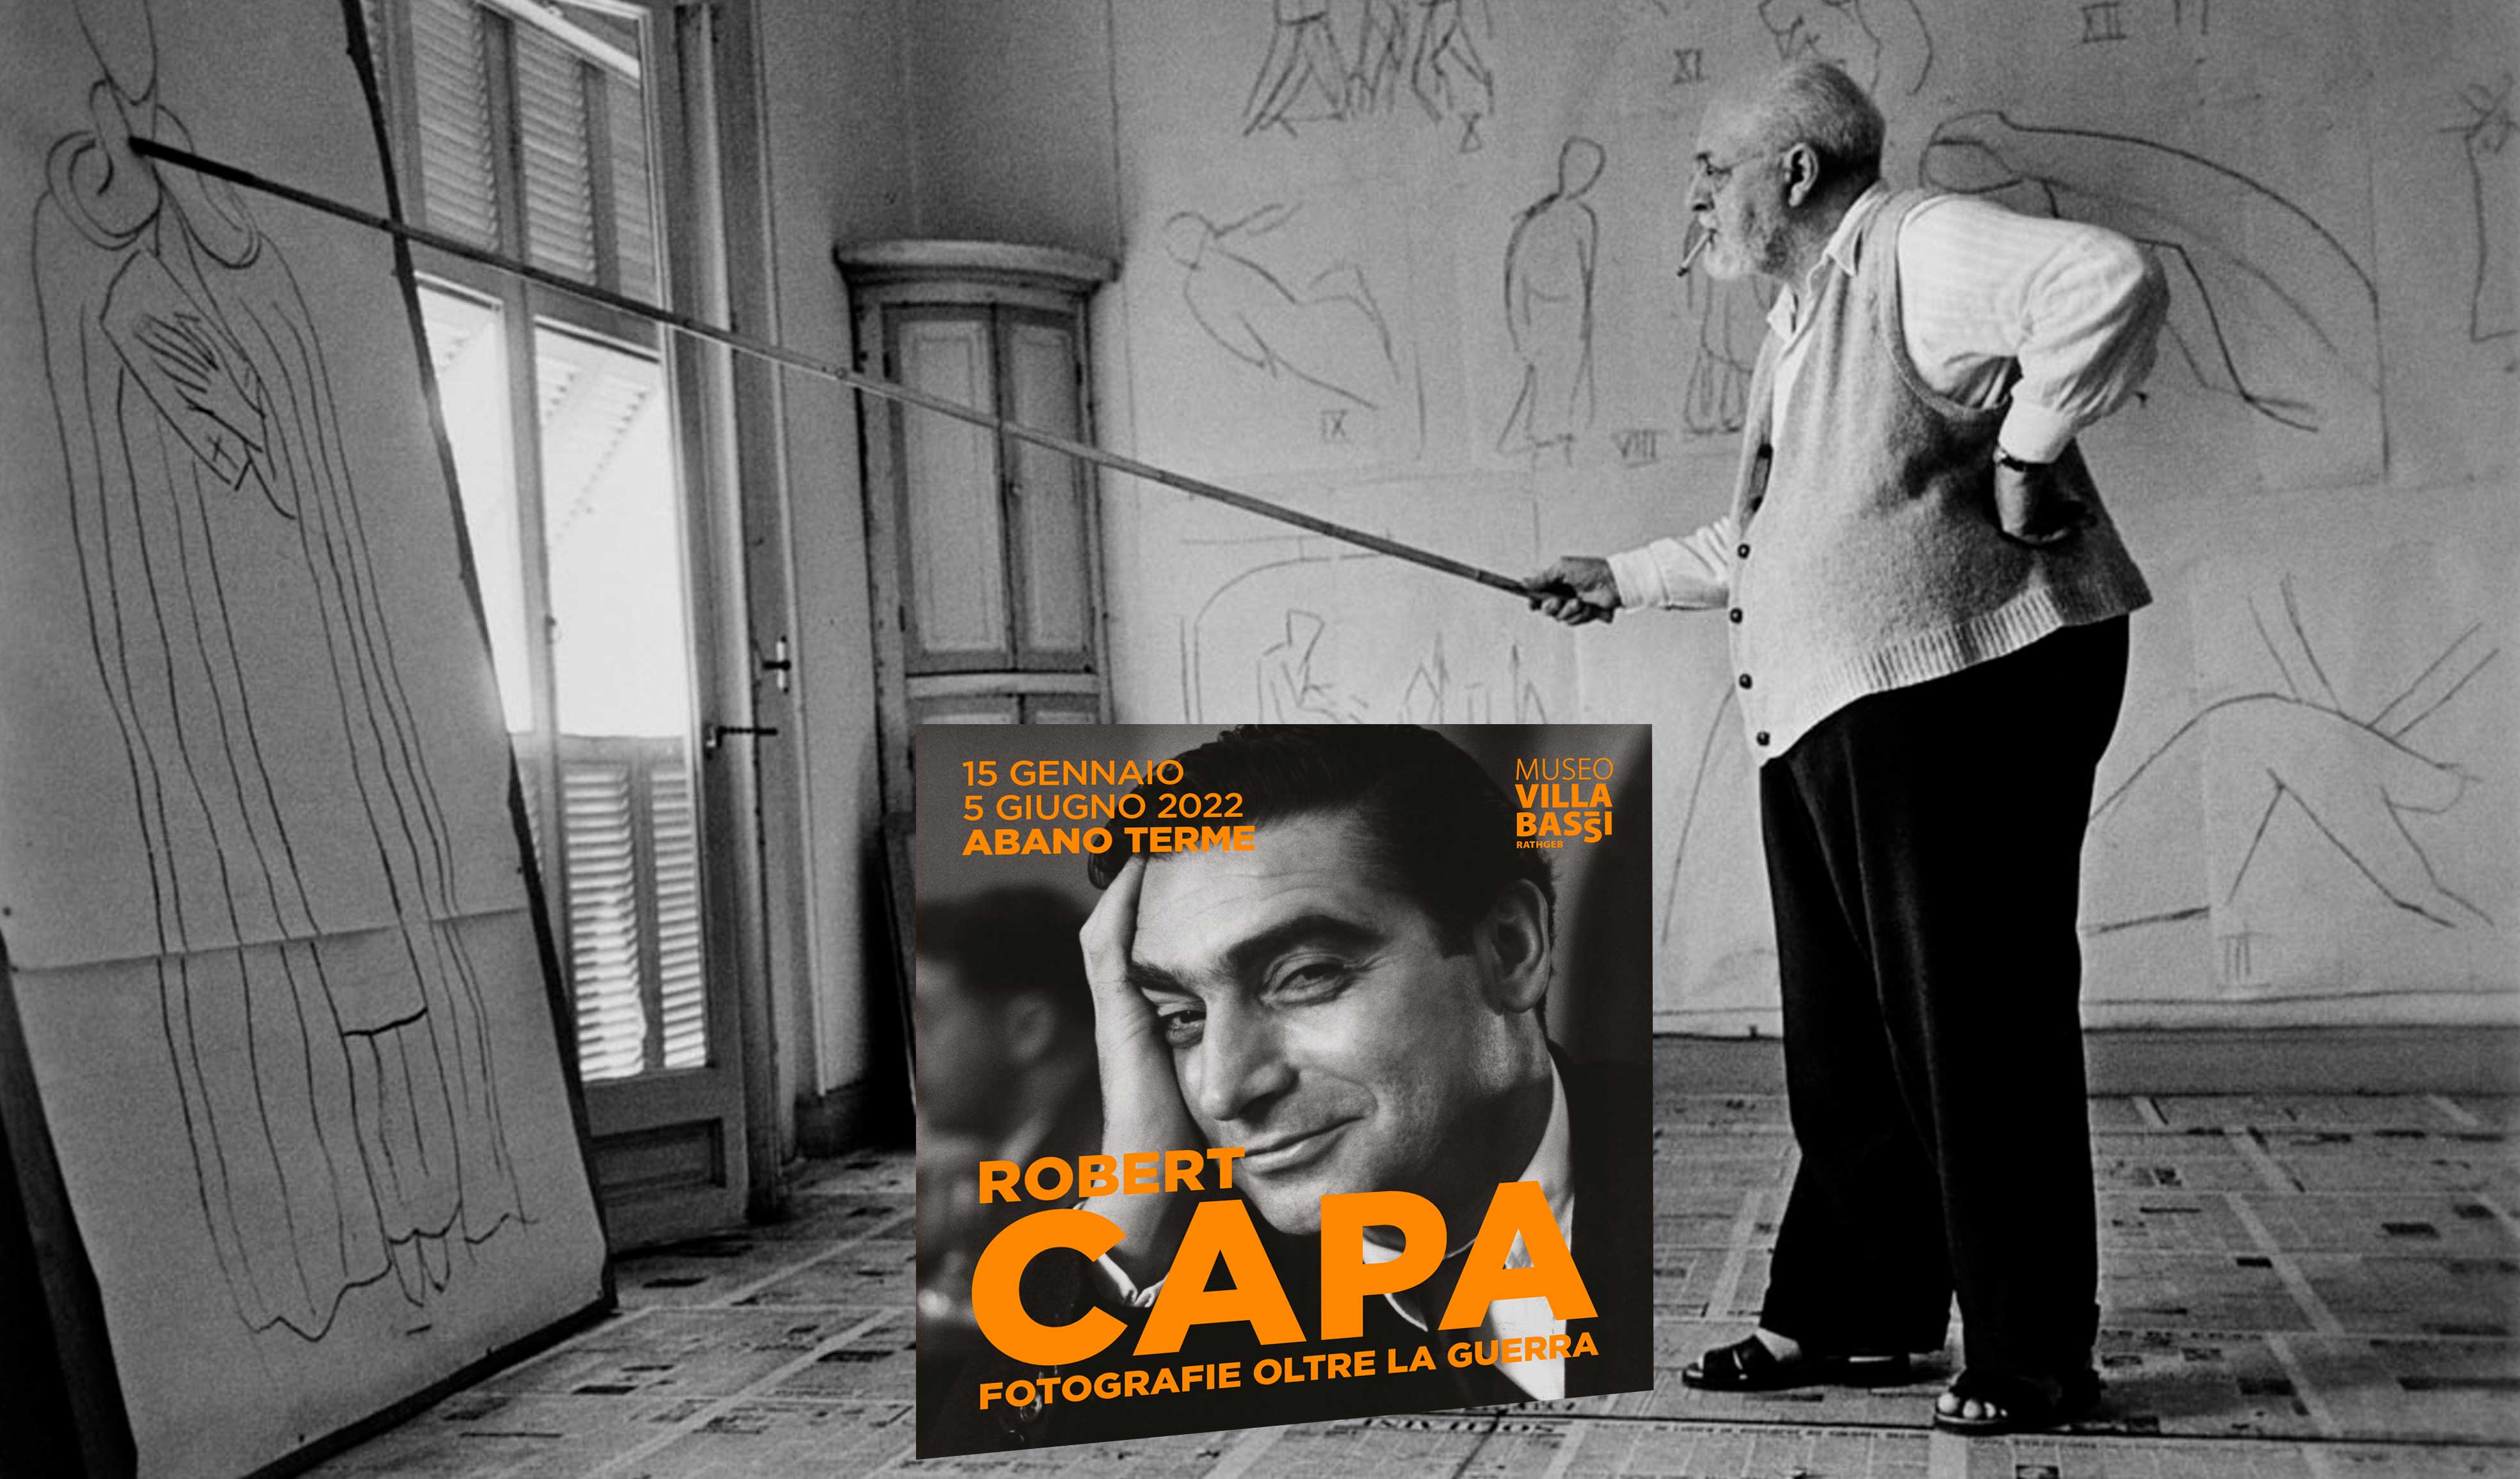 Robert Capa - fotografie oltre la guerra - Abano Terme 